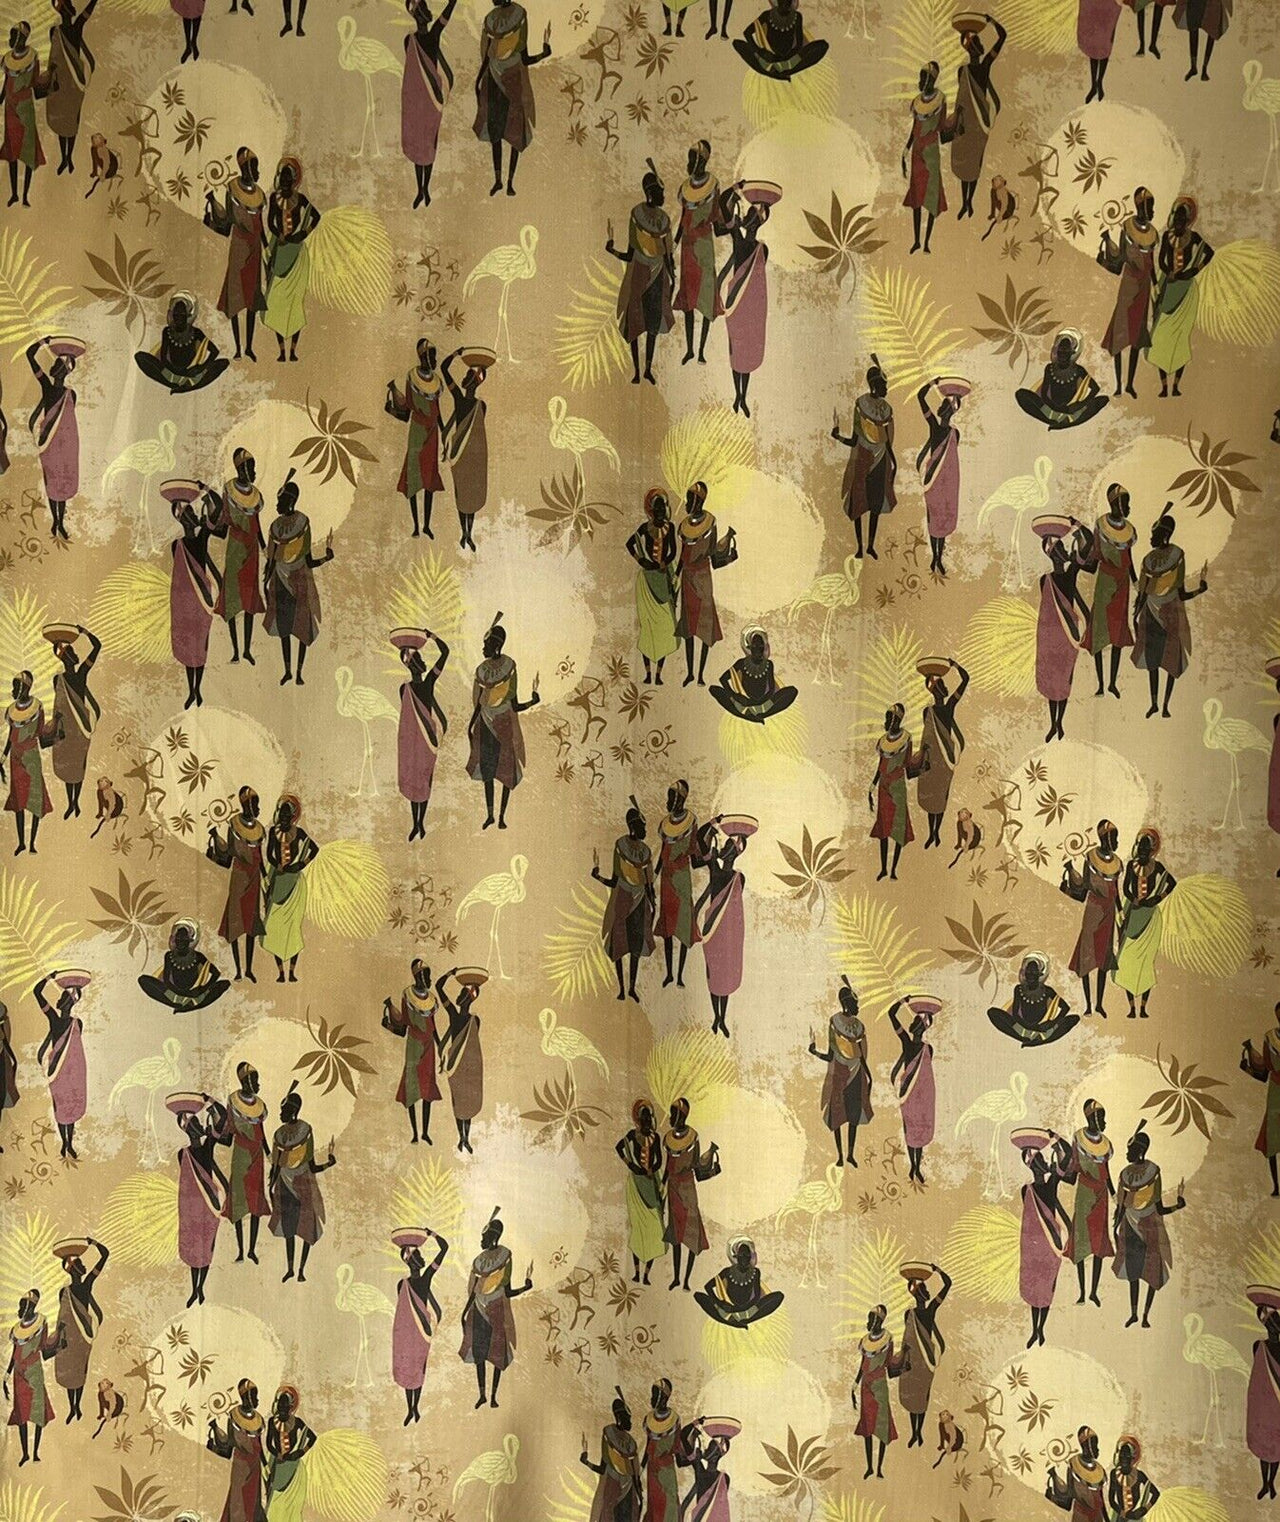 African Ladies Print Tribal Cotton Fabric Panel 140x100 Baobab Fruit Tree Leaves Yellow